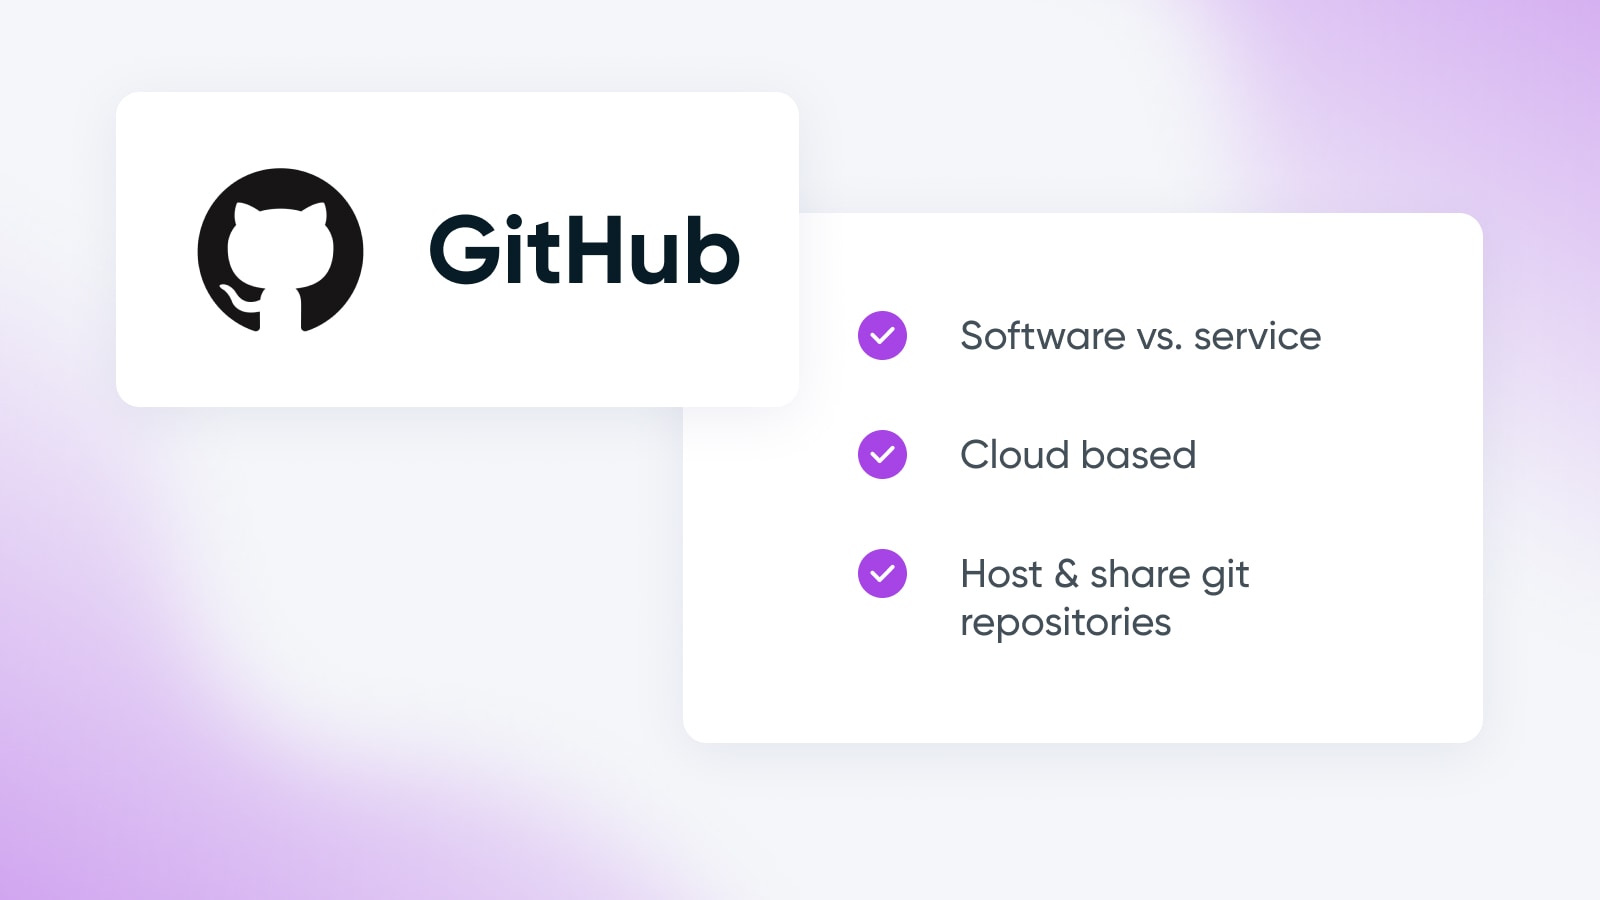 GitHub is a development platform for hosting Git repositories